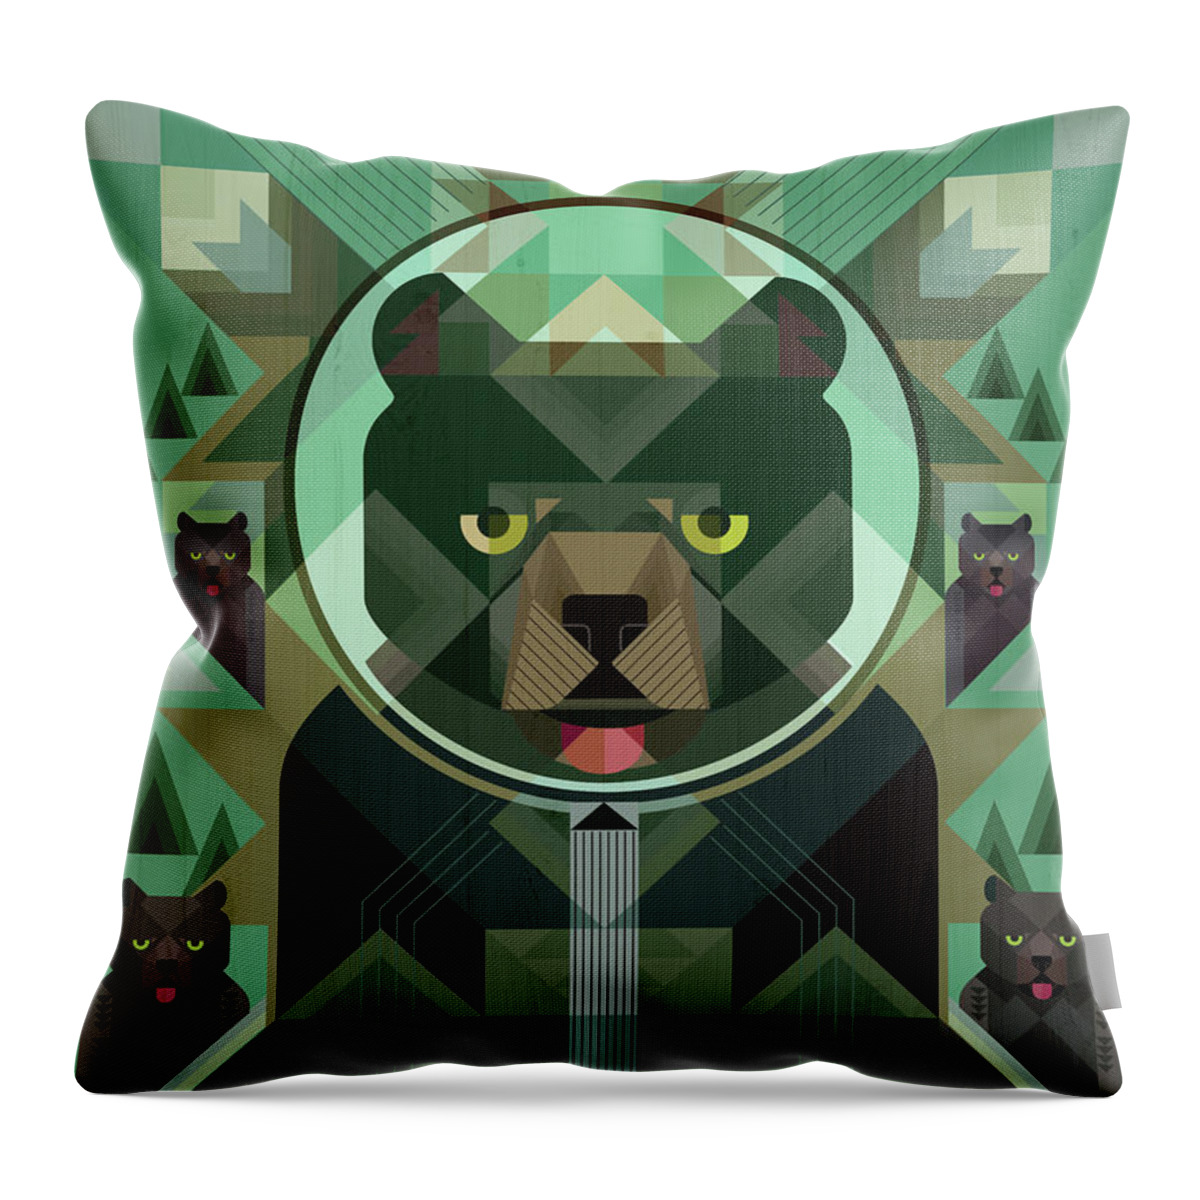 Bear Throw Pillow featuring the digital art A Sleuth of Bears Print by Garth Glazier